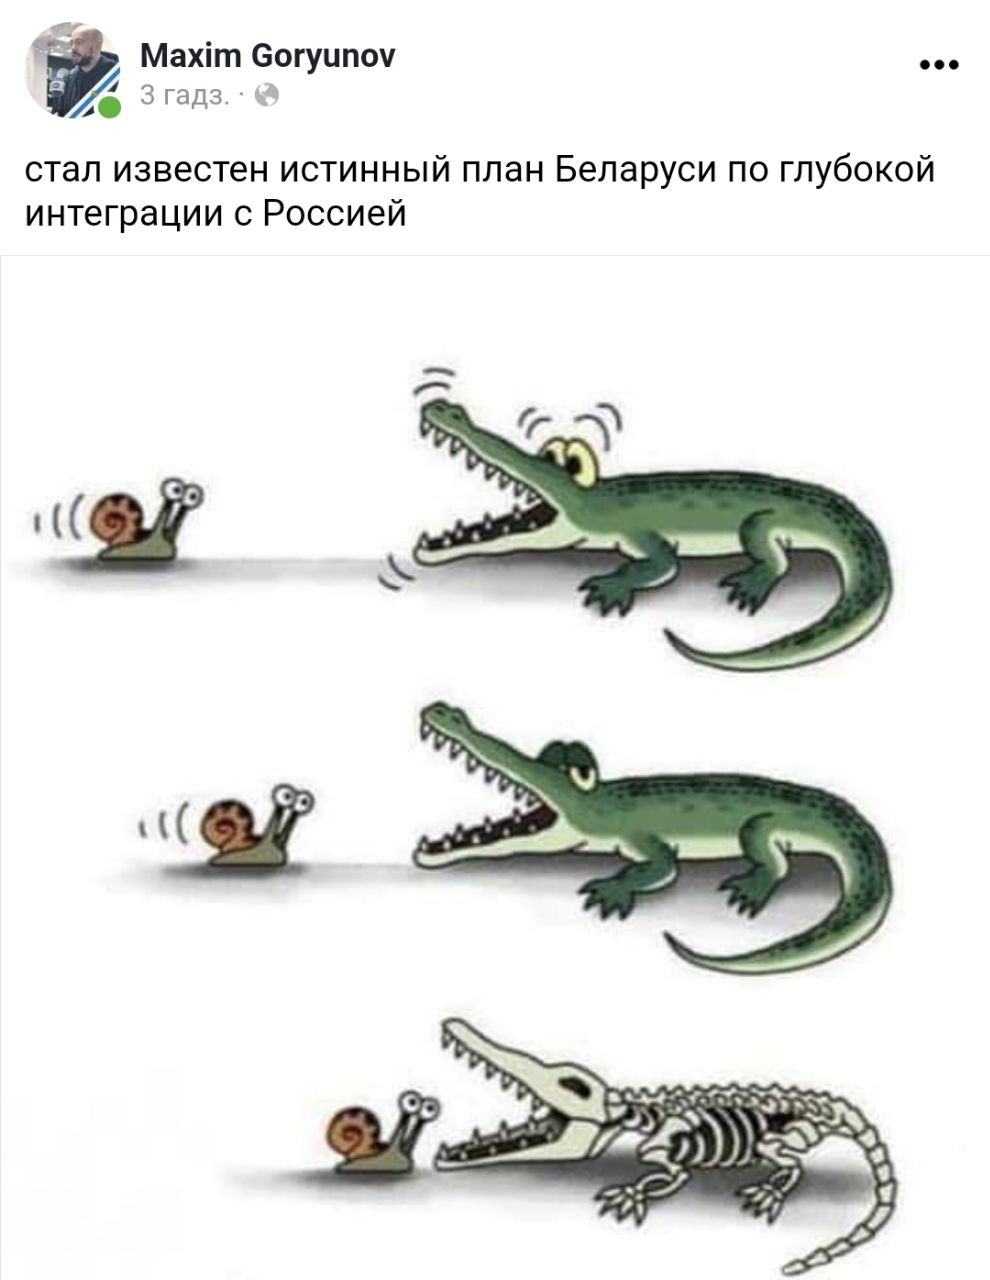 990x1280, 92 Kb / крокодил, улитка, интеграция, россия, беларусь, скелет